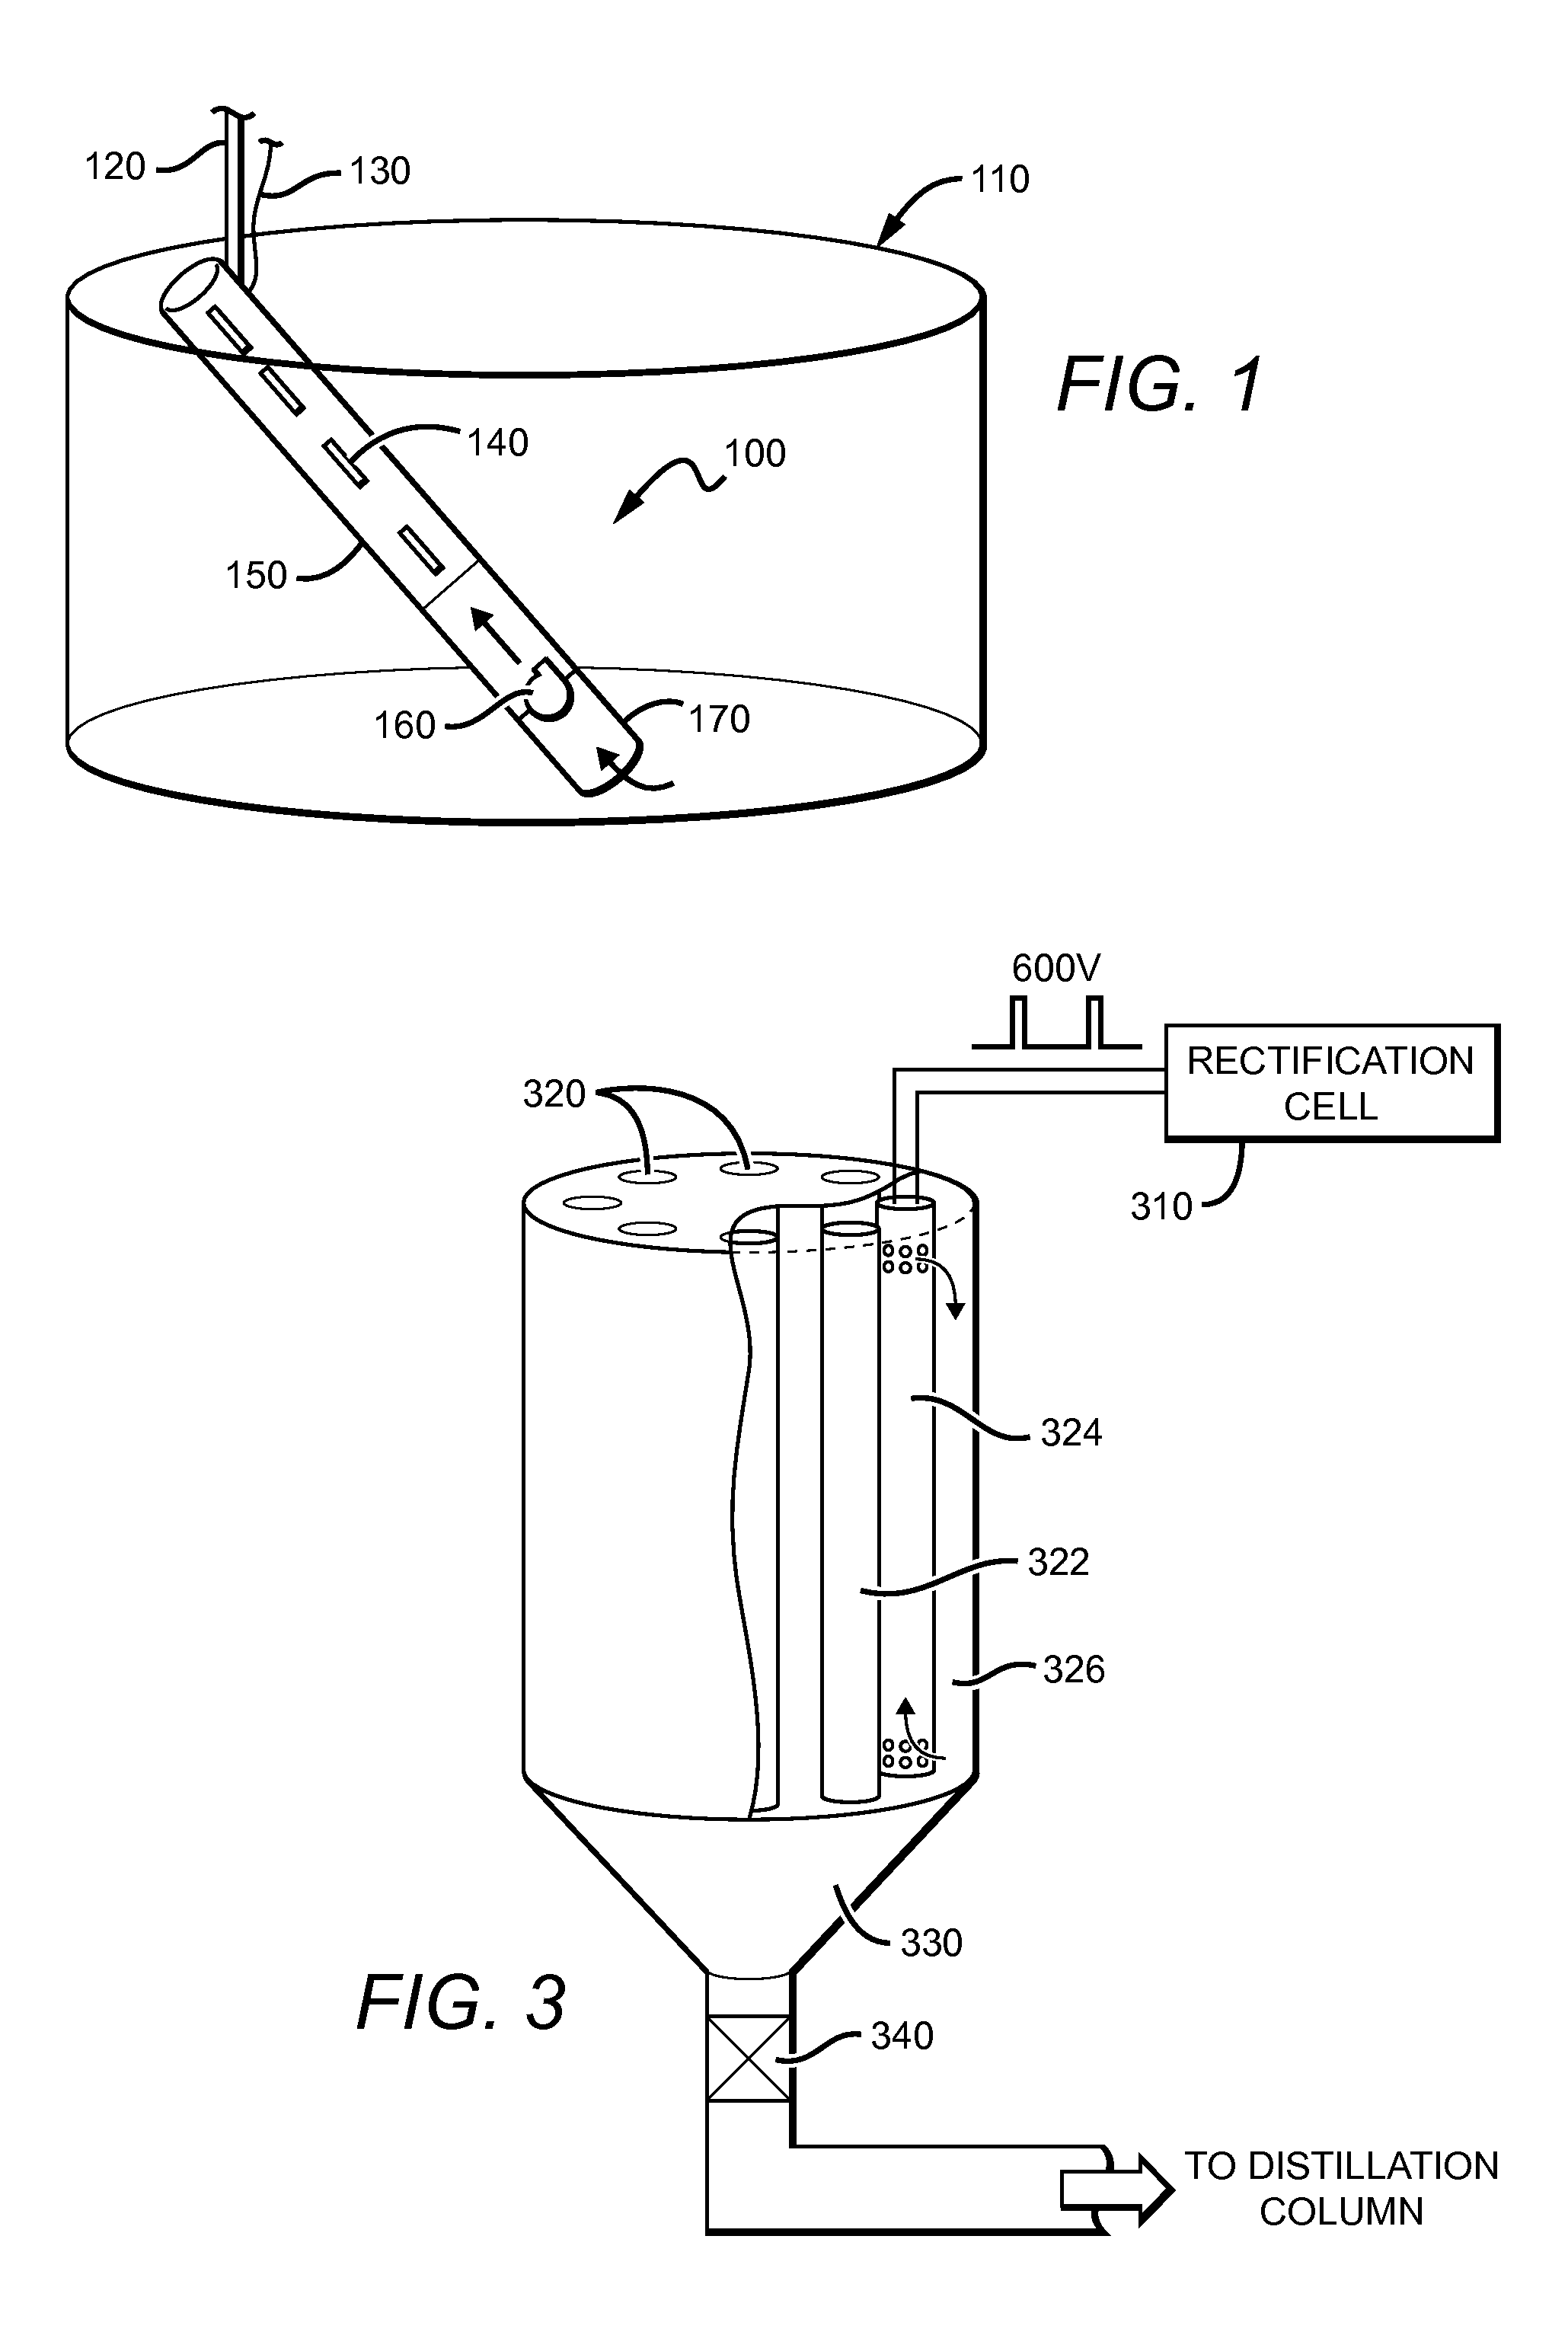 Flow tube reactor